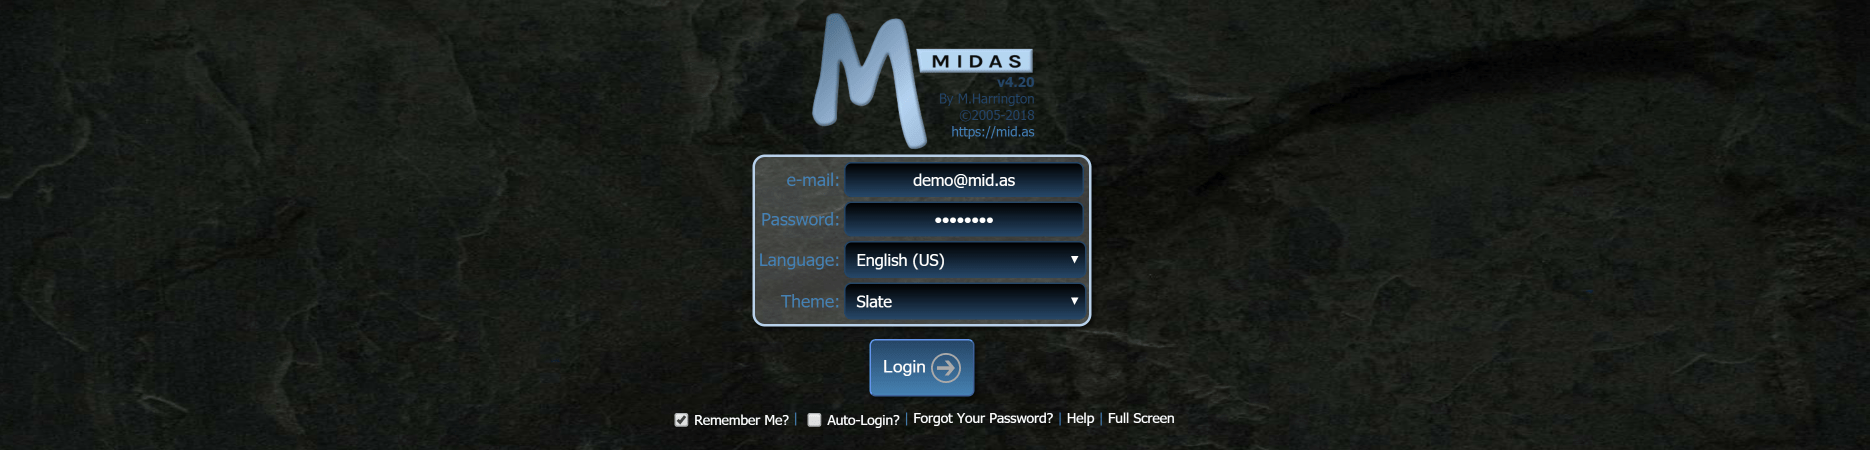 Dark Slate Theme for MIDAS